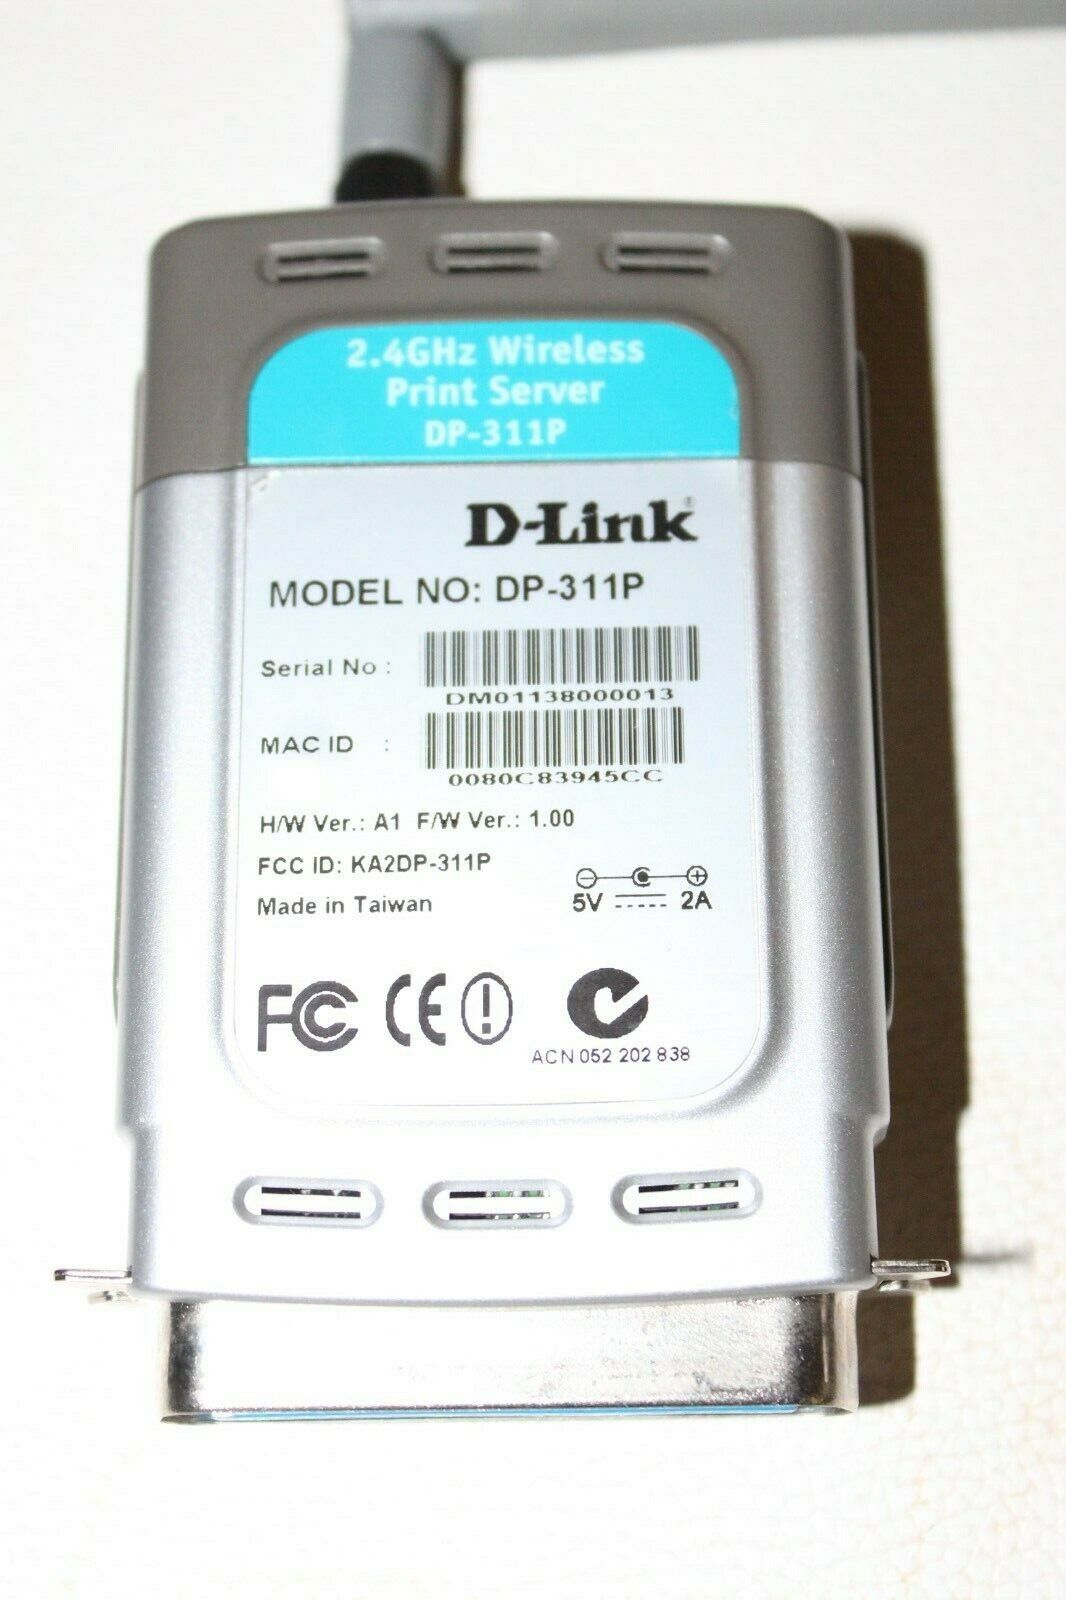 D-Link DP-311P Wireless Print Server